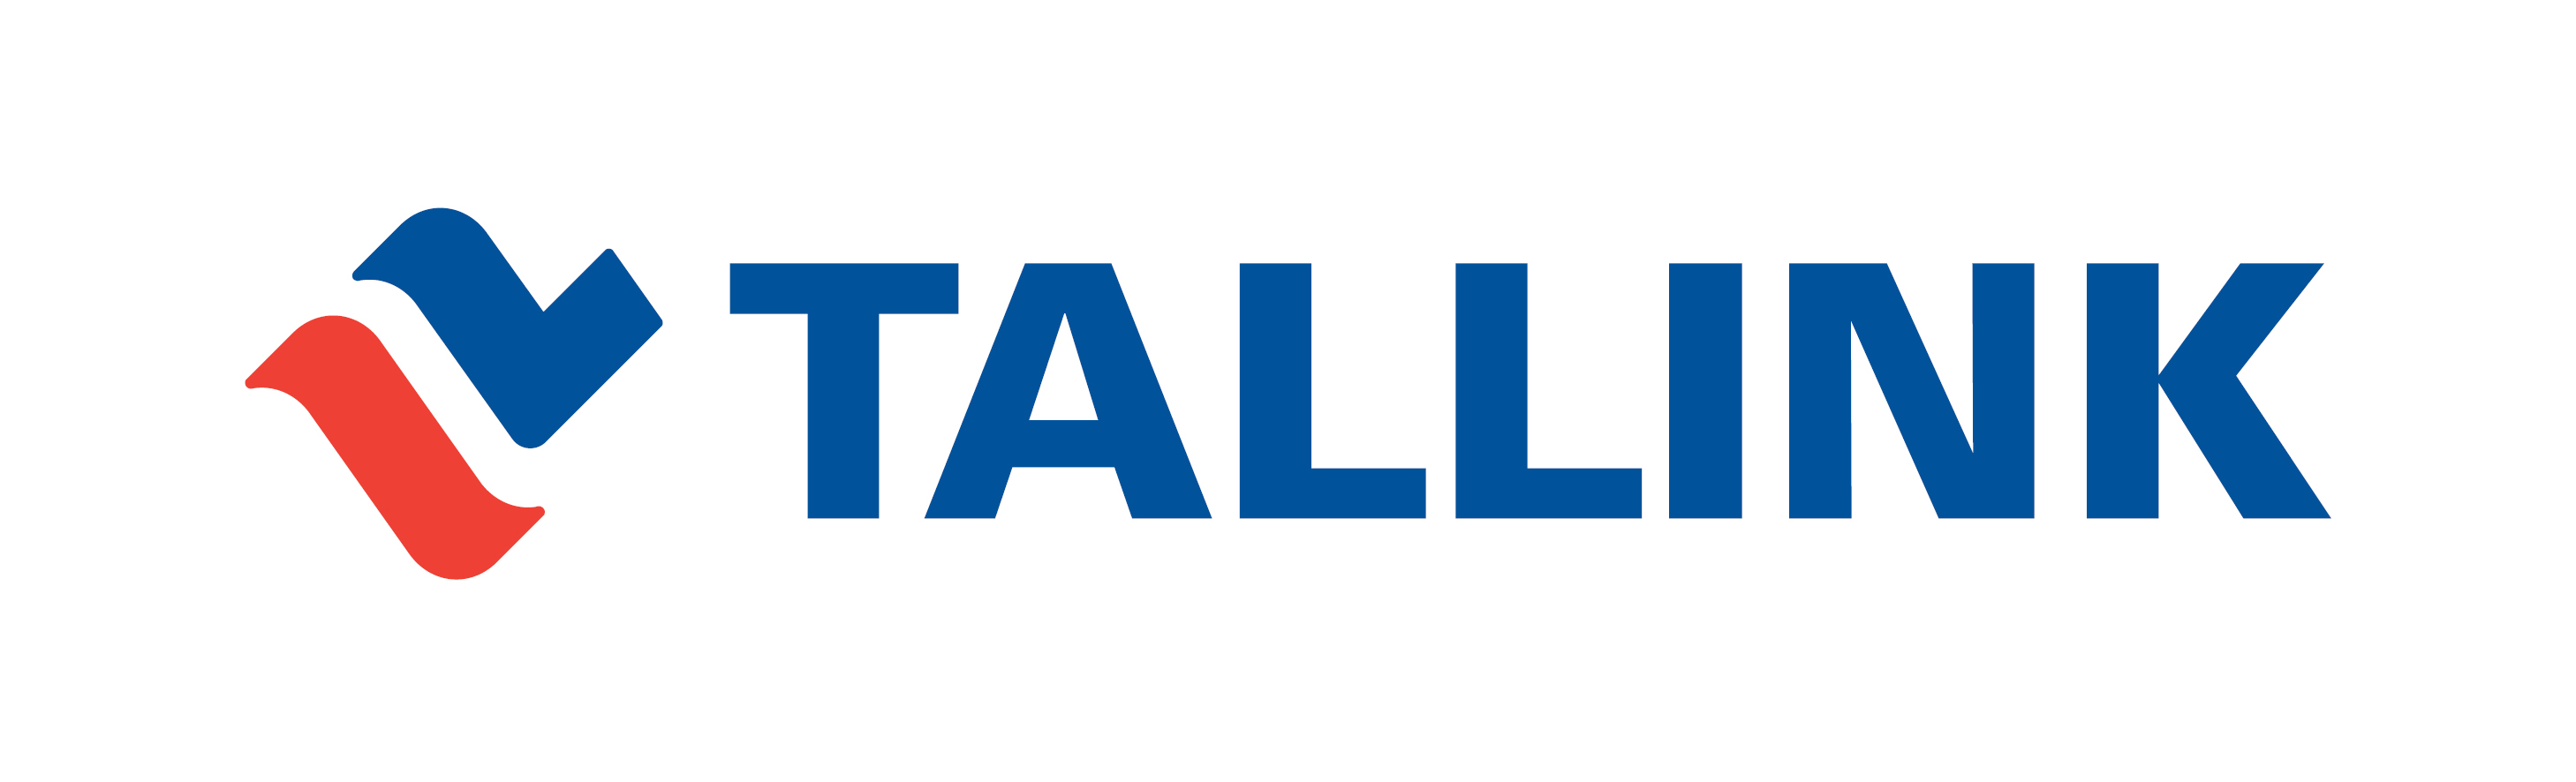 Tallink Silja Line logo.jpg